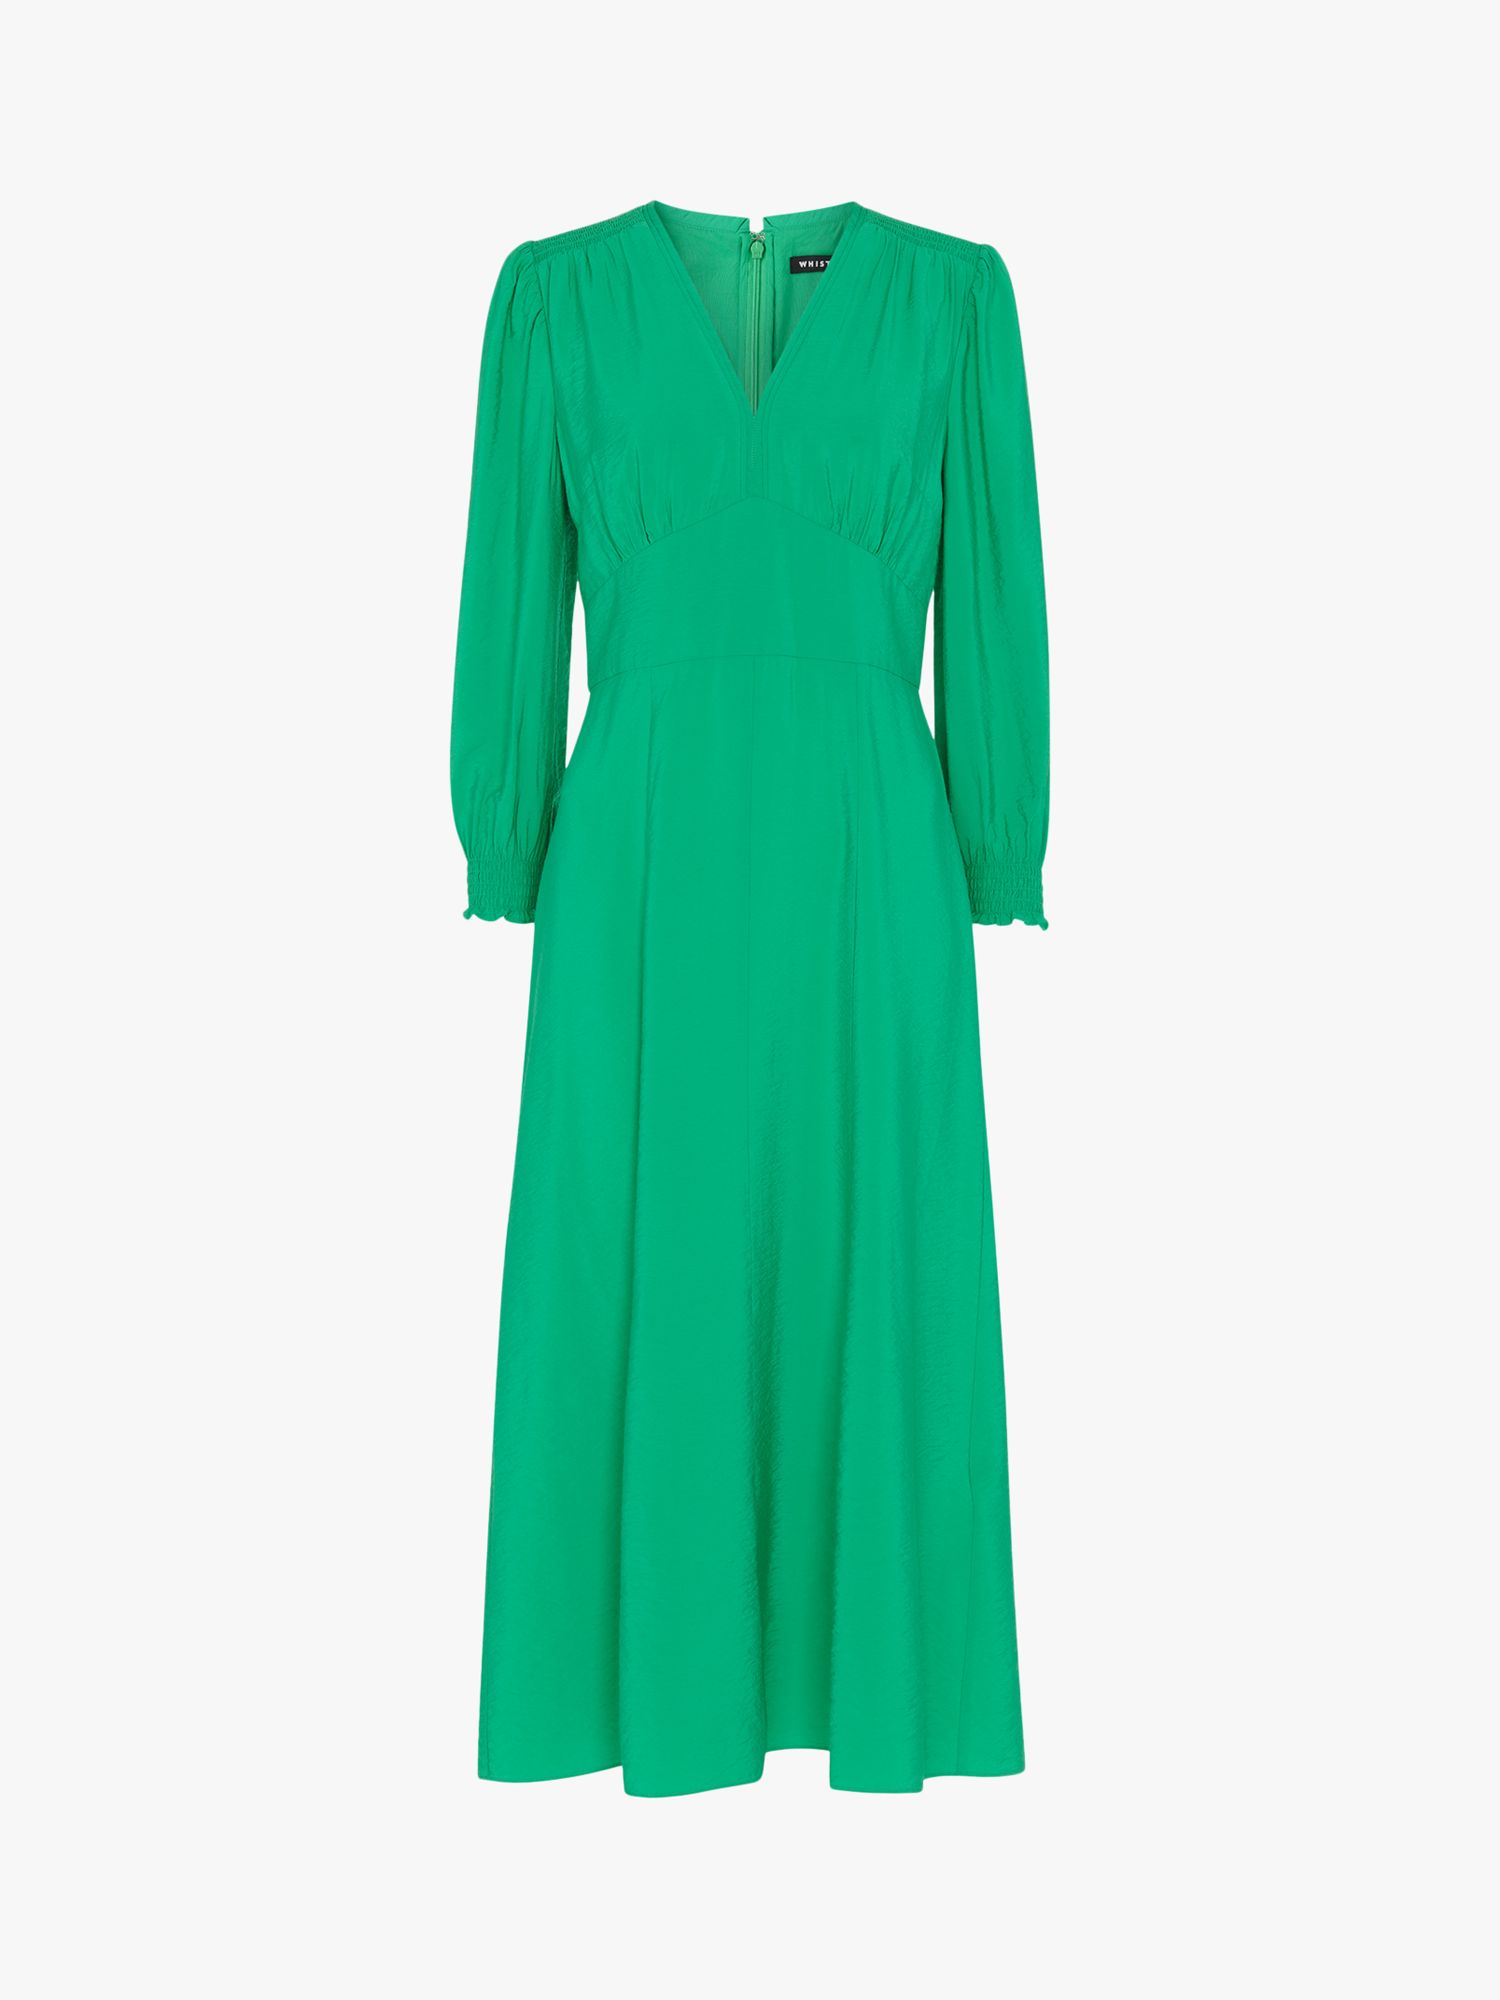 Whistles Sula Midi Dress, Green at John Lewis & Partners